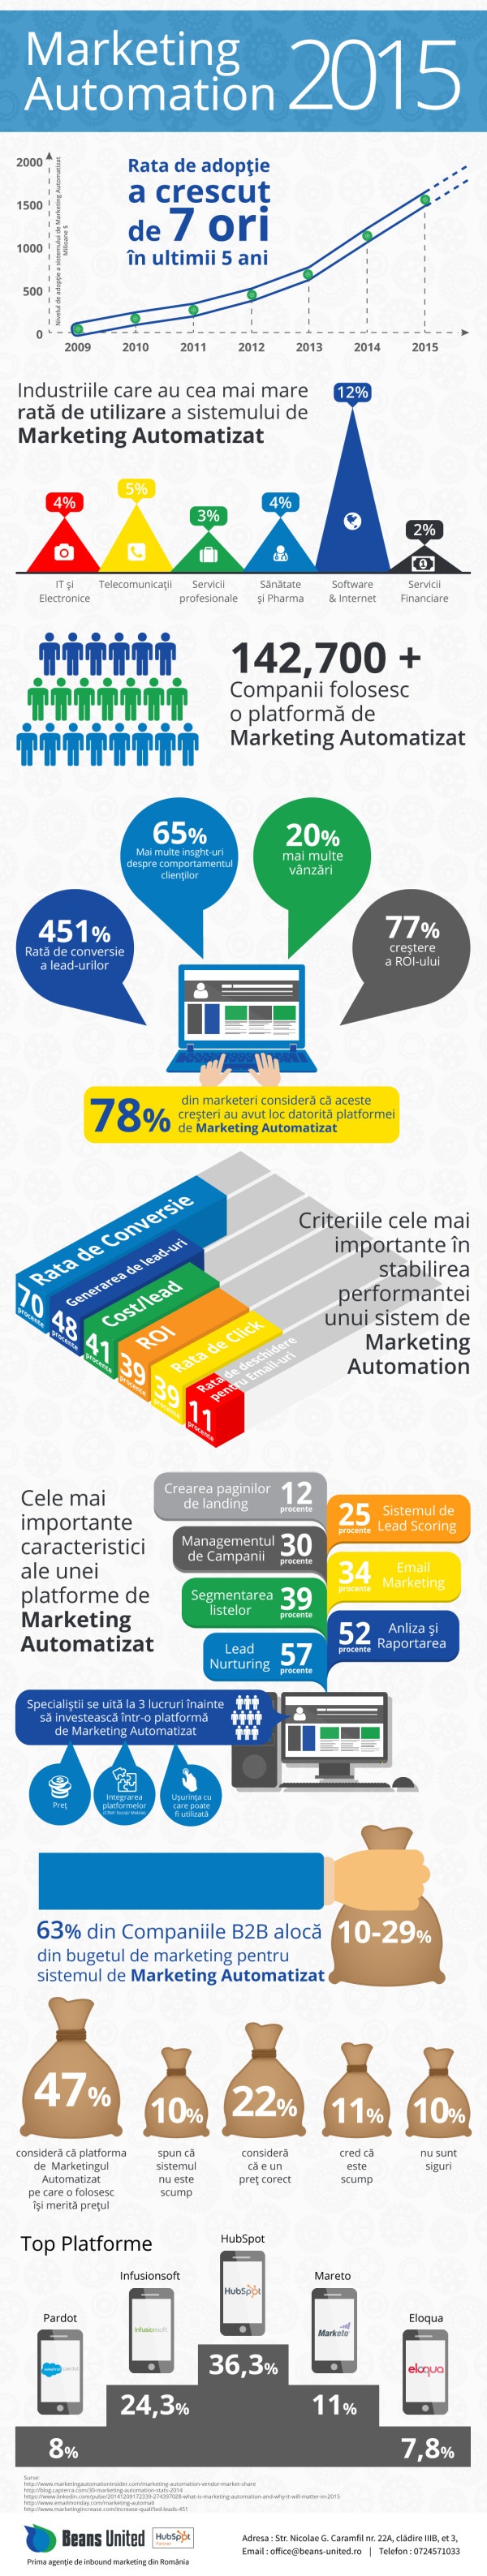 Infografic Marketing Automation 2015